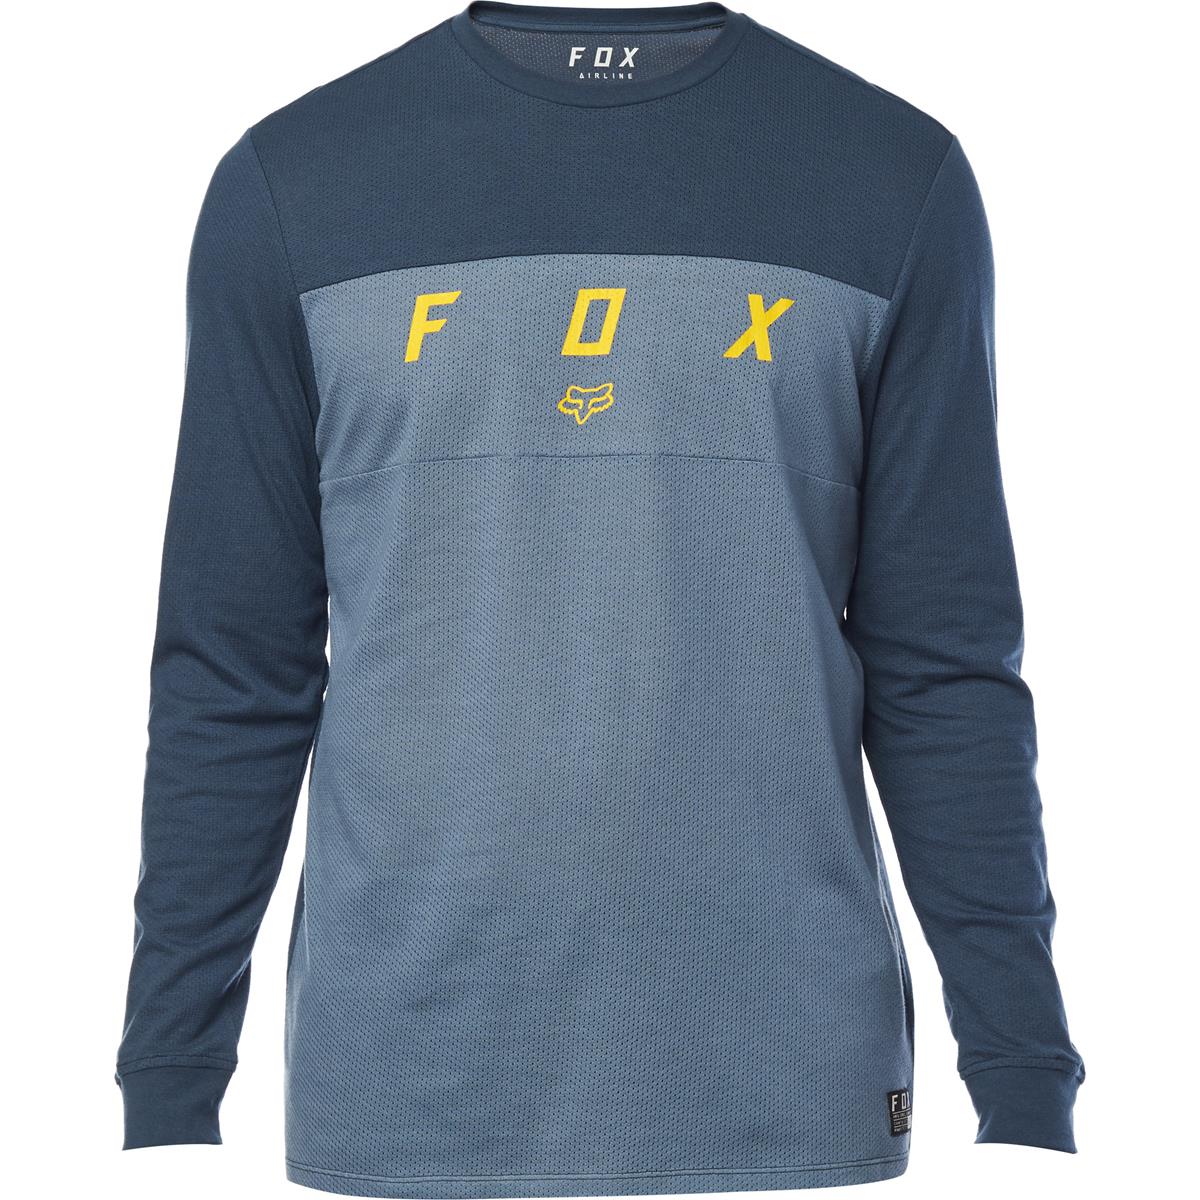 Fox Longsleeve Shirt Slyder Navy